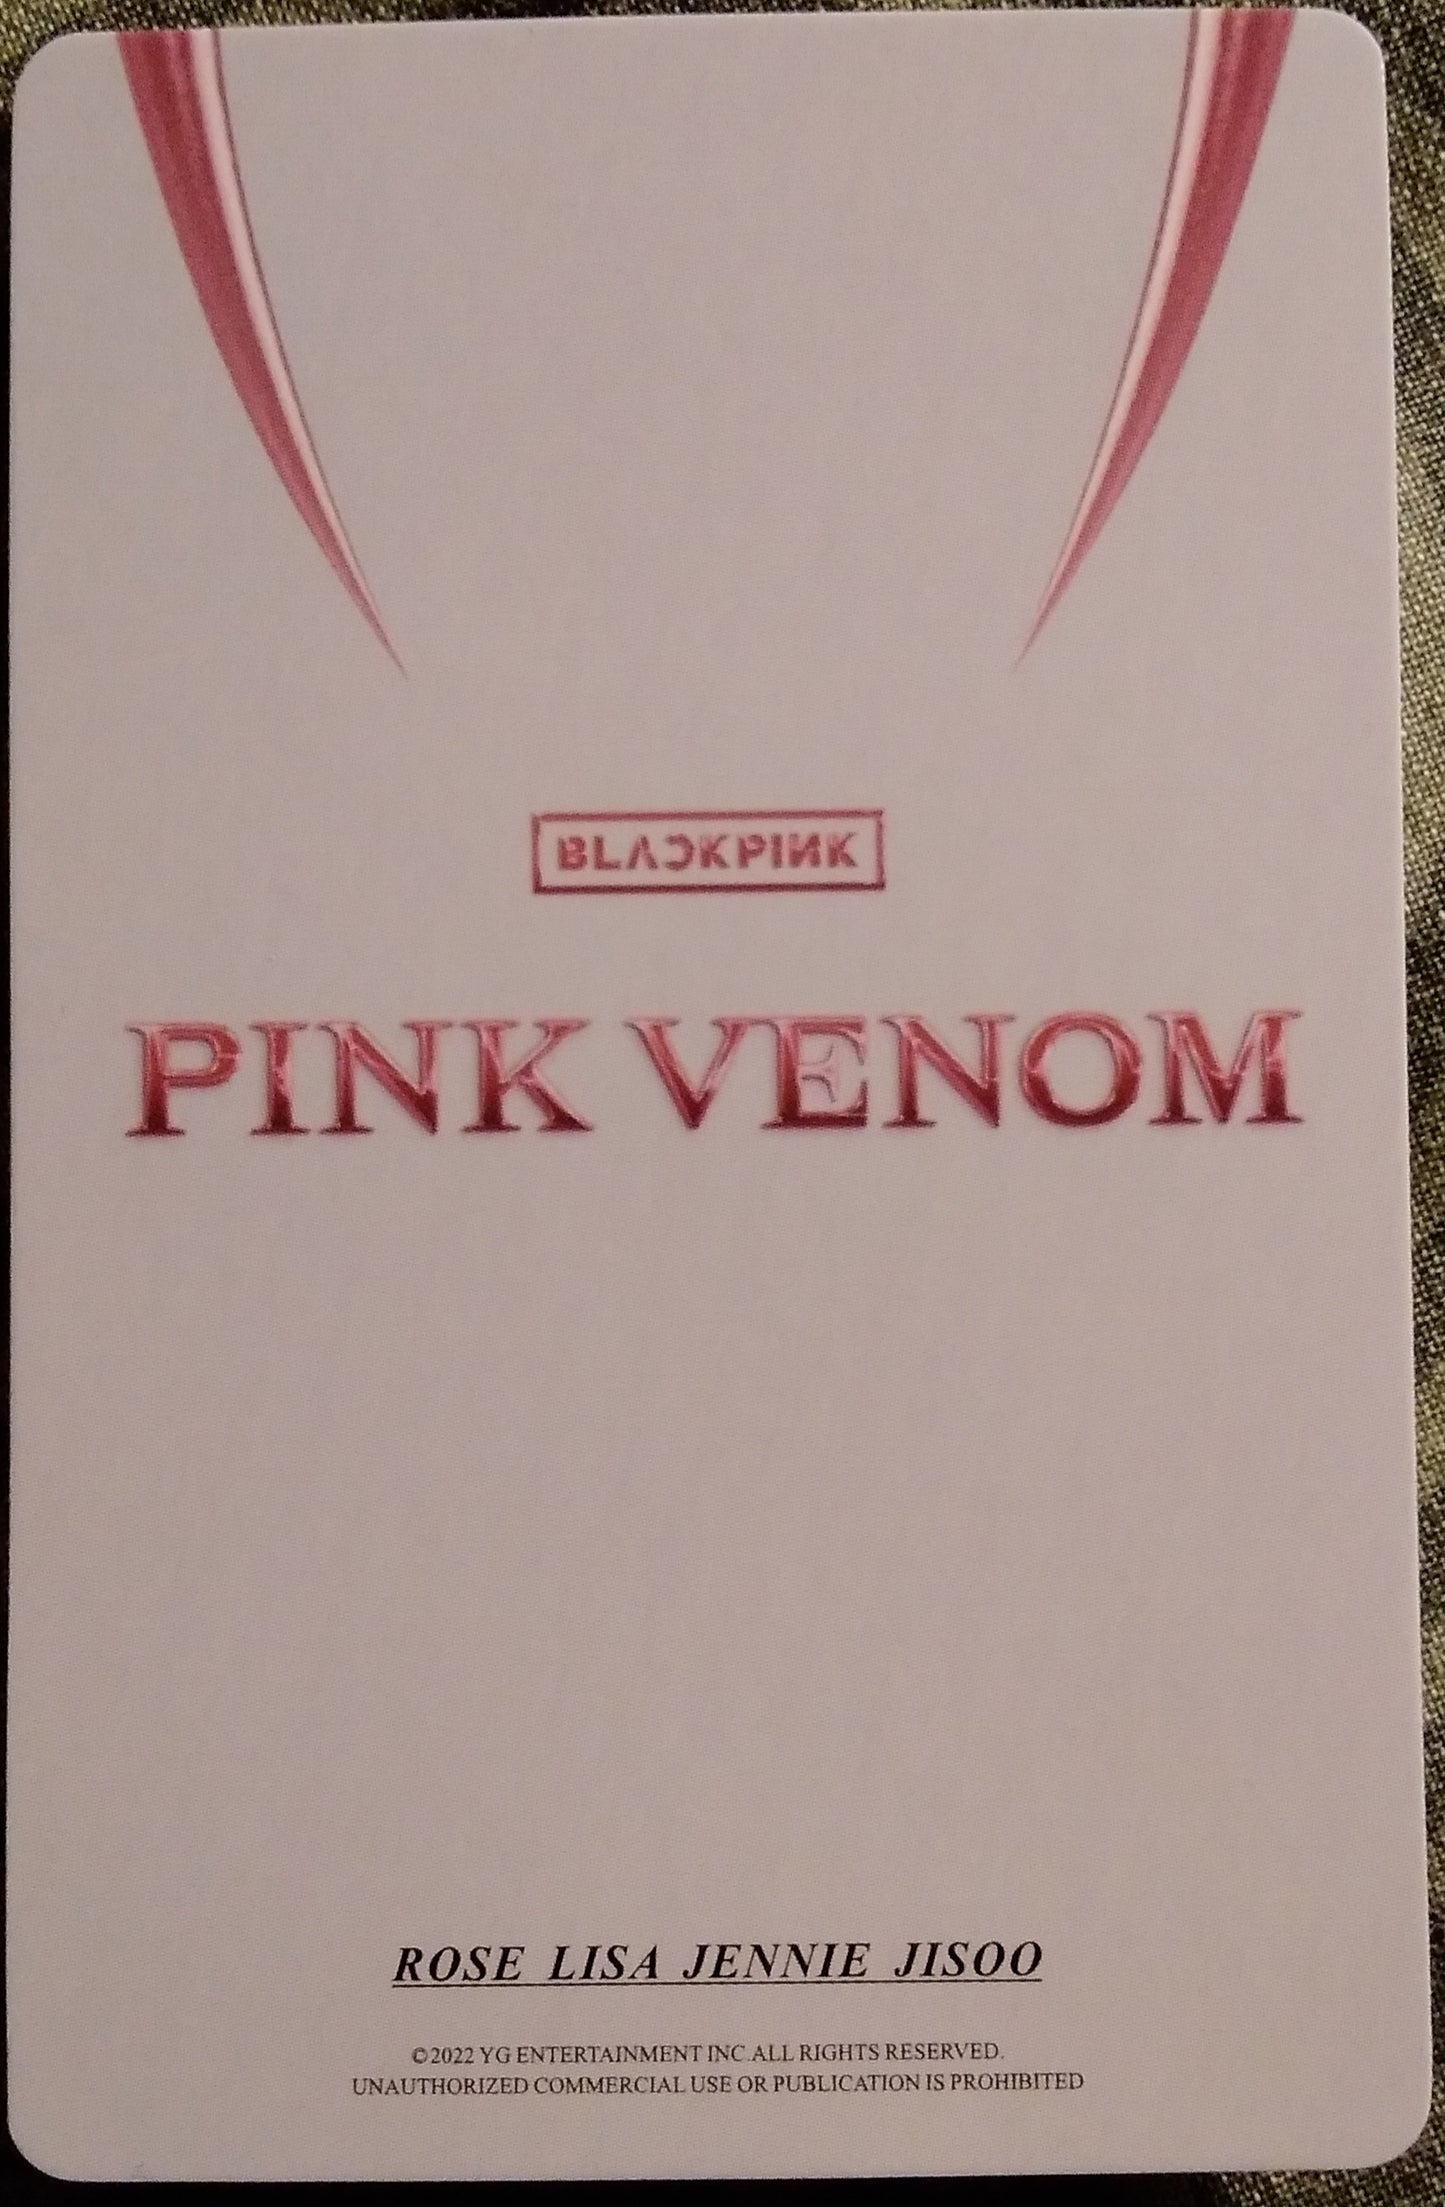 PHhotocard  BLACKPINK  Pink venom